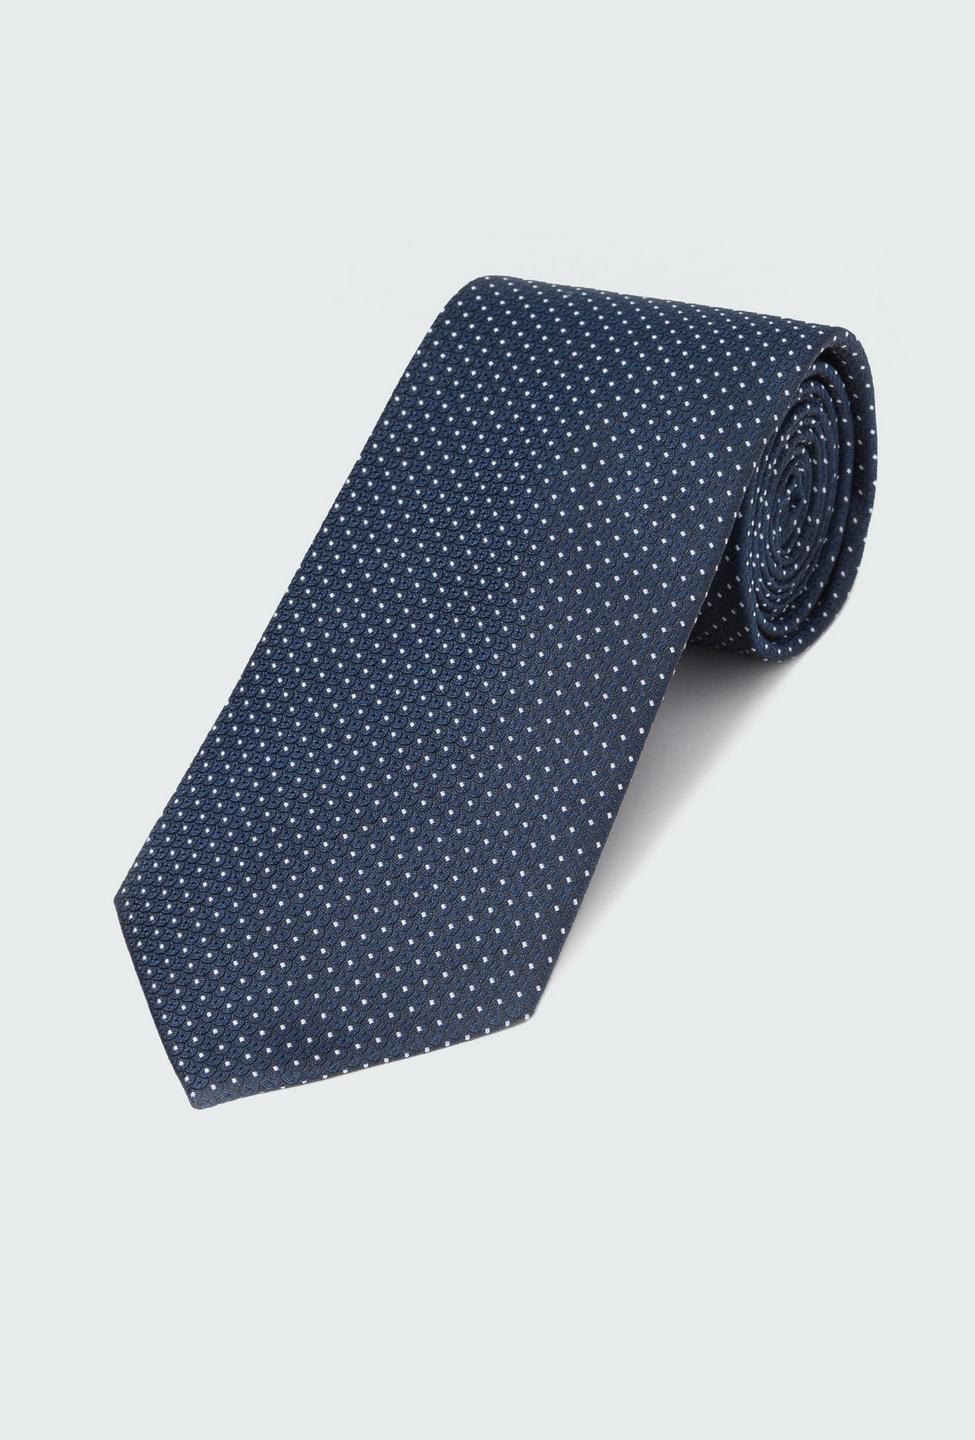 Navy tie - Pattern Design from Premium Indochino Collection